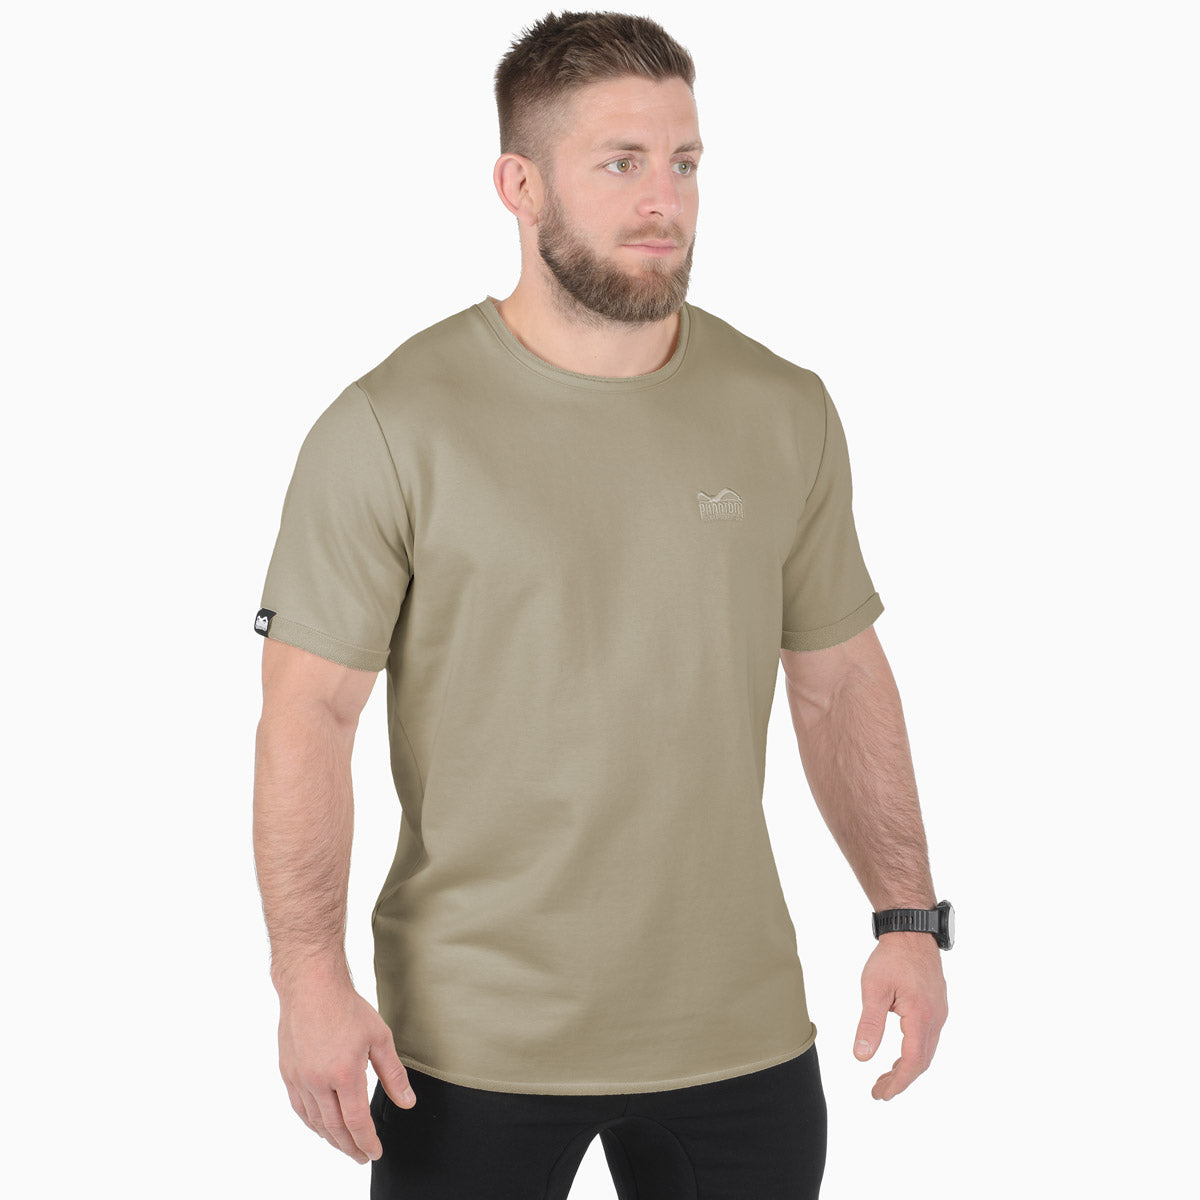 Heavy Tee Sonic Sand | Shirt for fitness + martial arts - PHANTOM ATHLETICS | T-Shirts